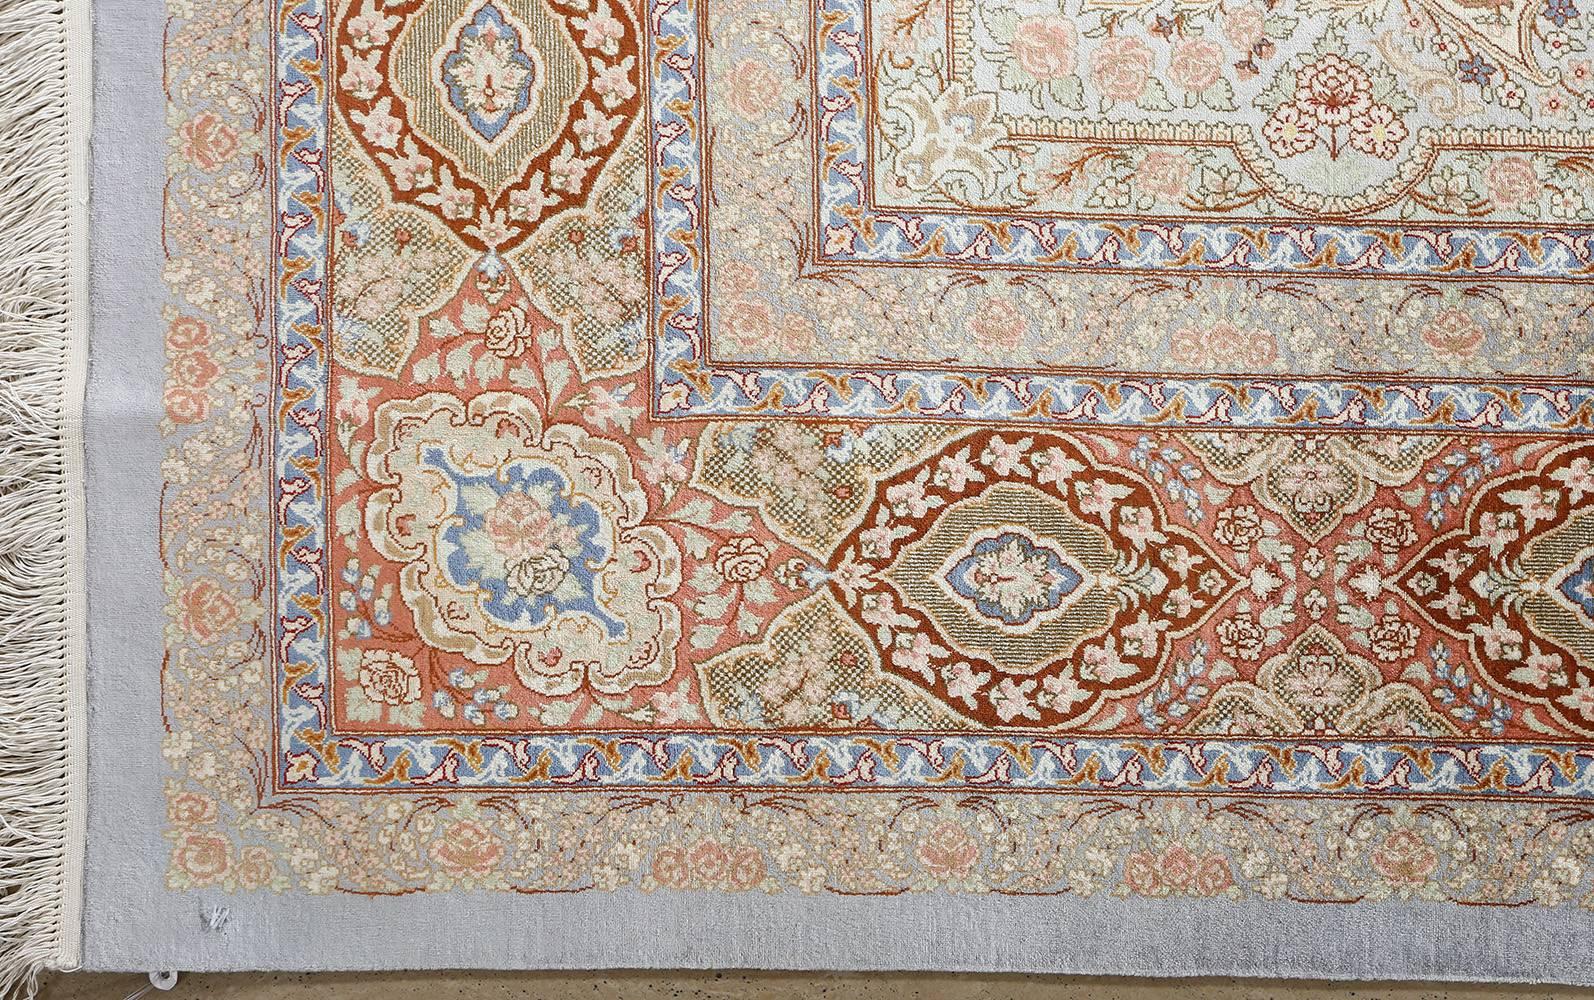 Fine Silk Vintage Qum Persian Rug.Size: 6 ft 6 in x 9 ft 11 in (1.98 m x 3.02 m) 1